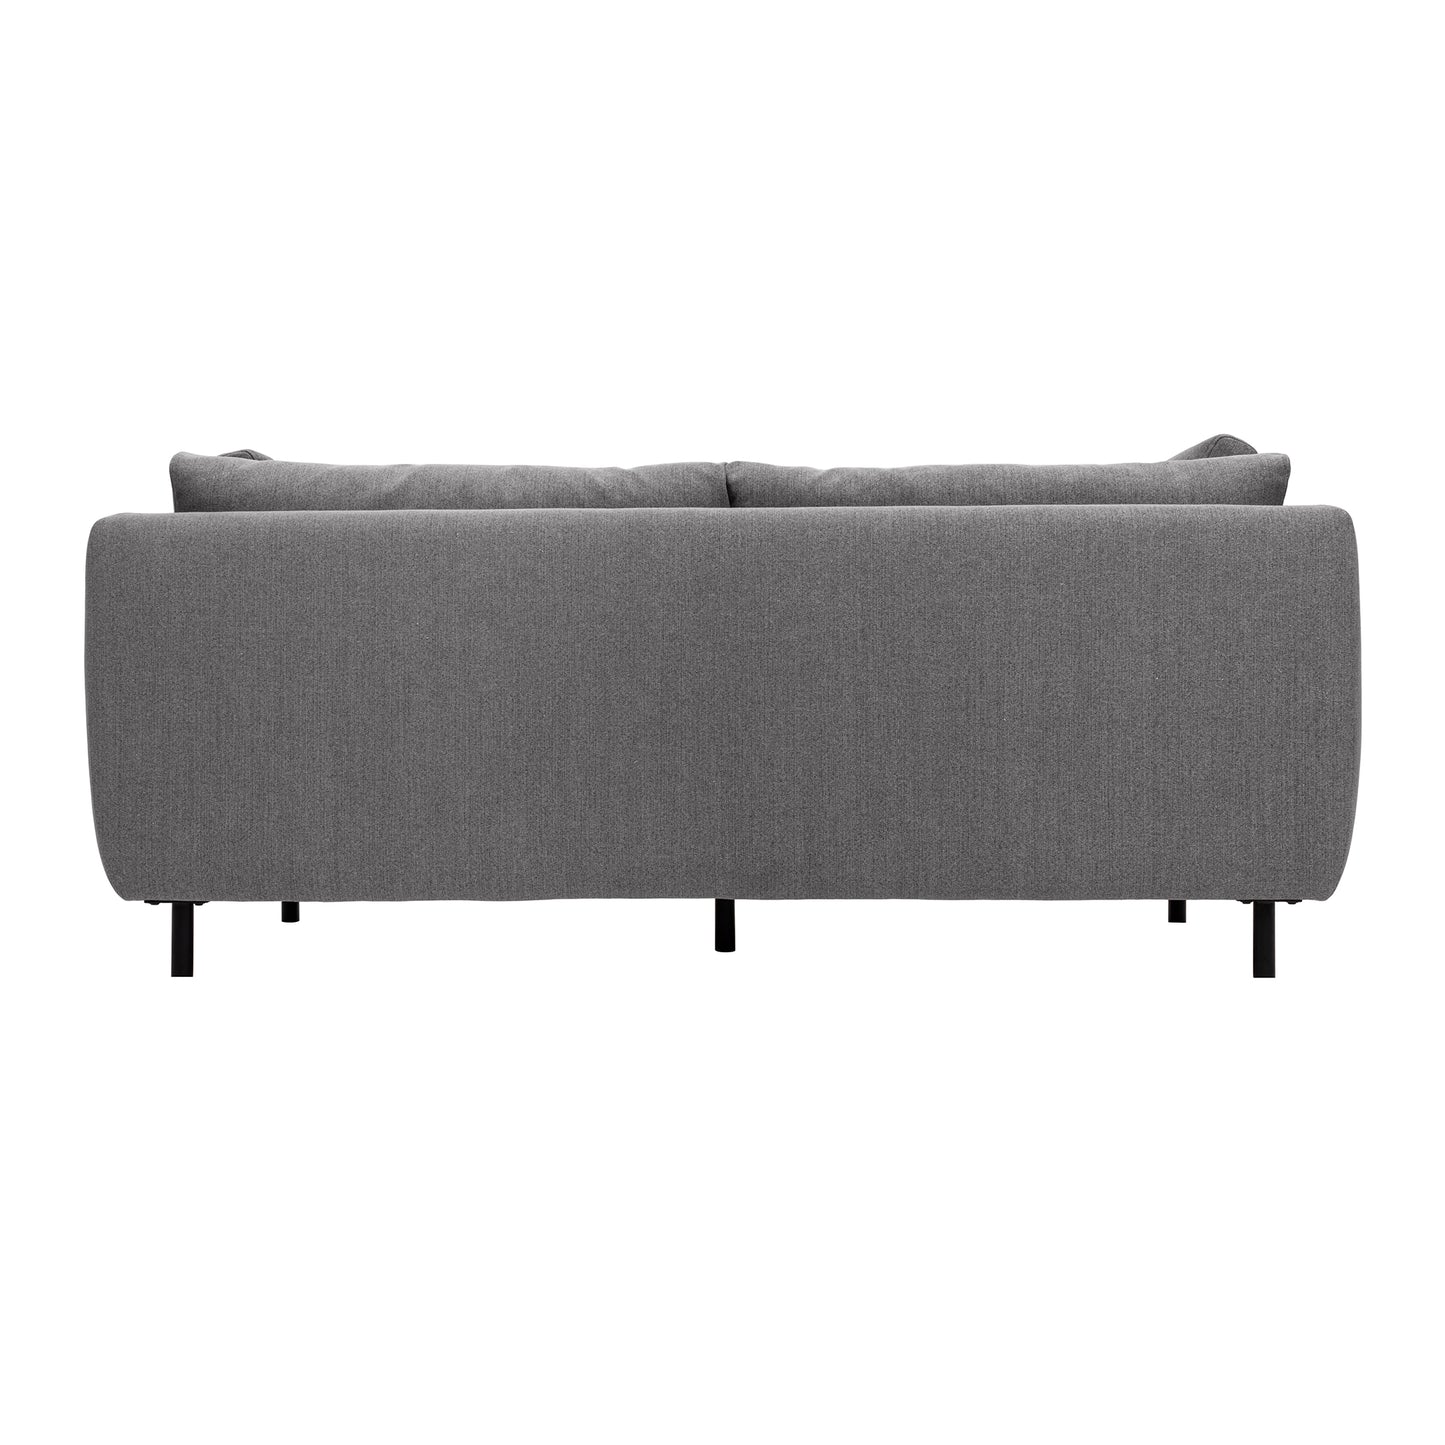 Serenity 79" Gray Fabric Sofa with Black Metal Legs